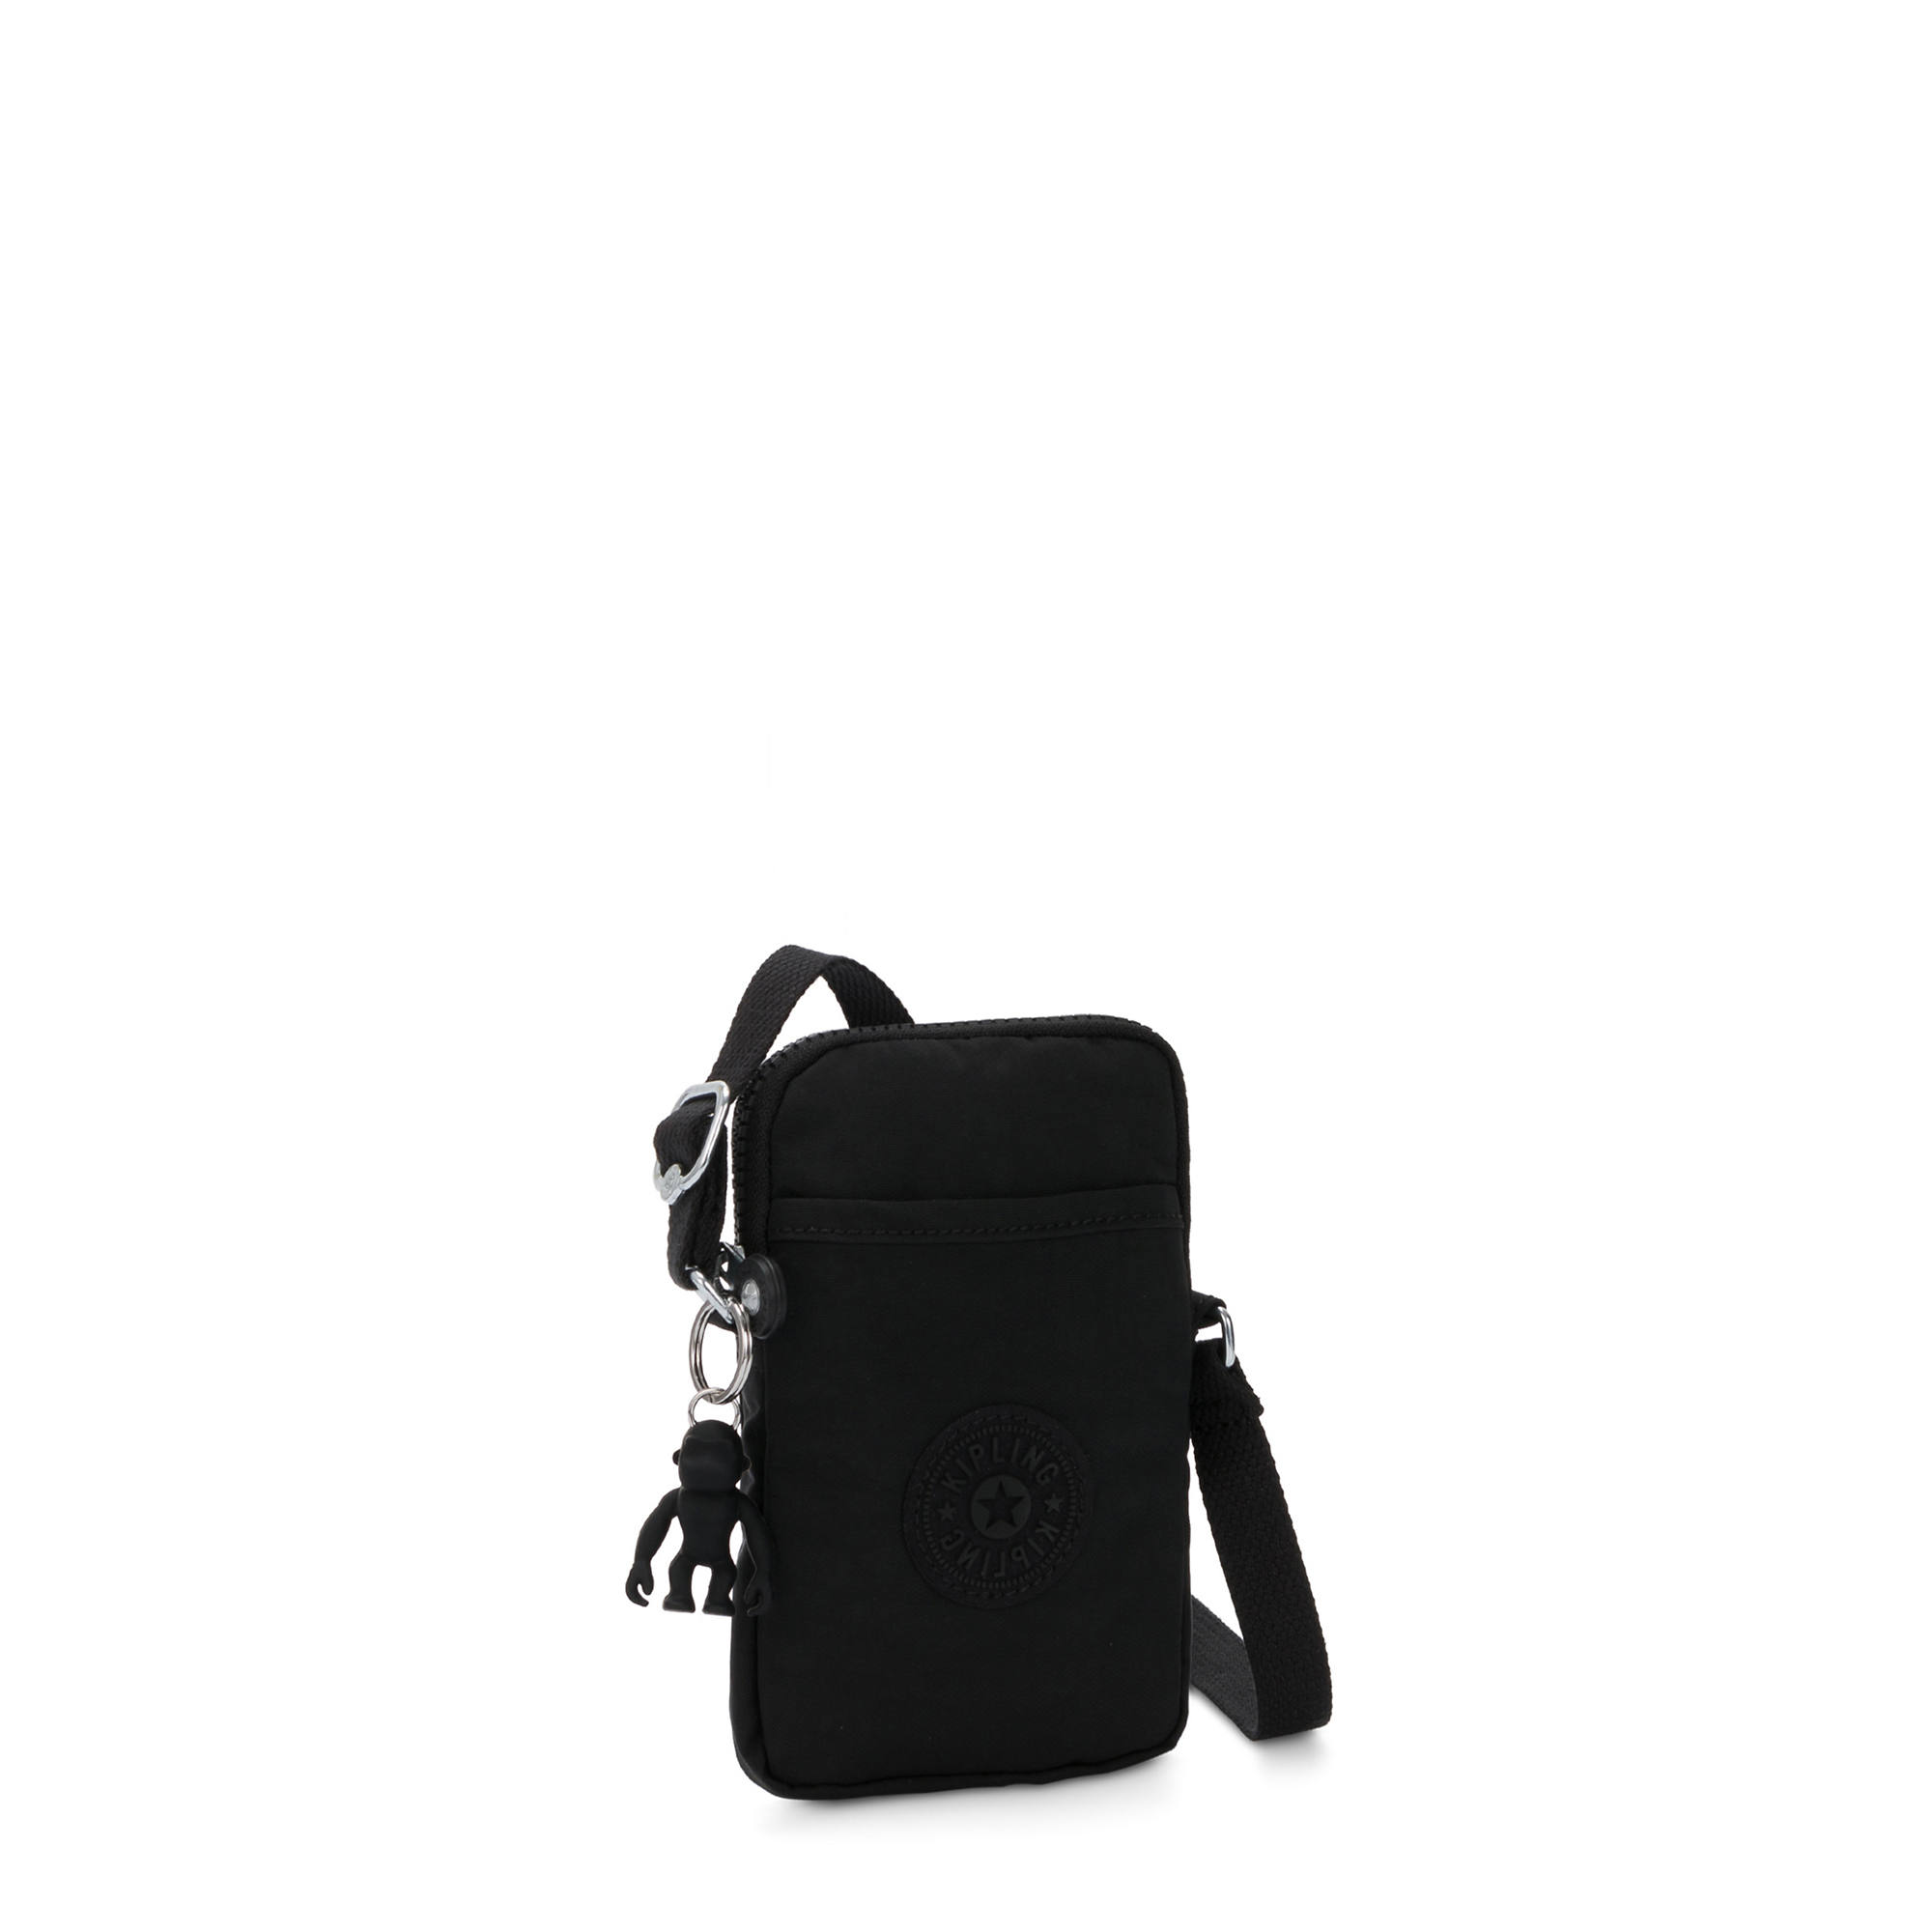 Kipling Tally Crossbody Phone Bag | eBay